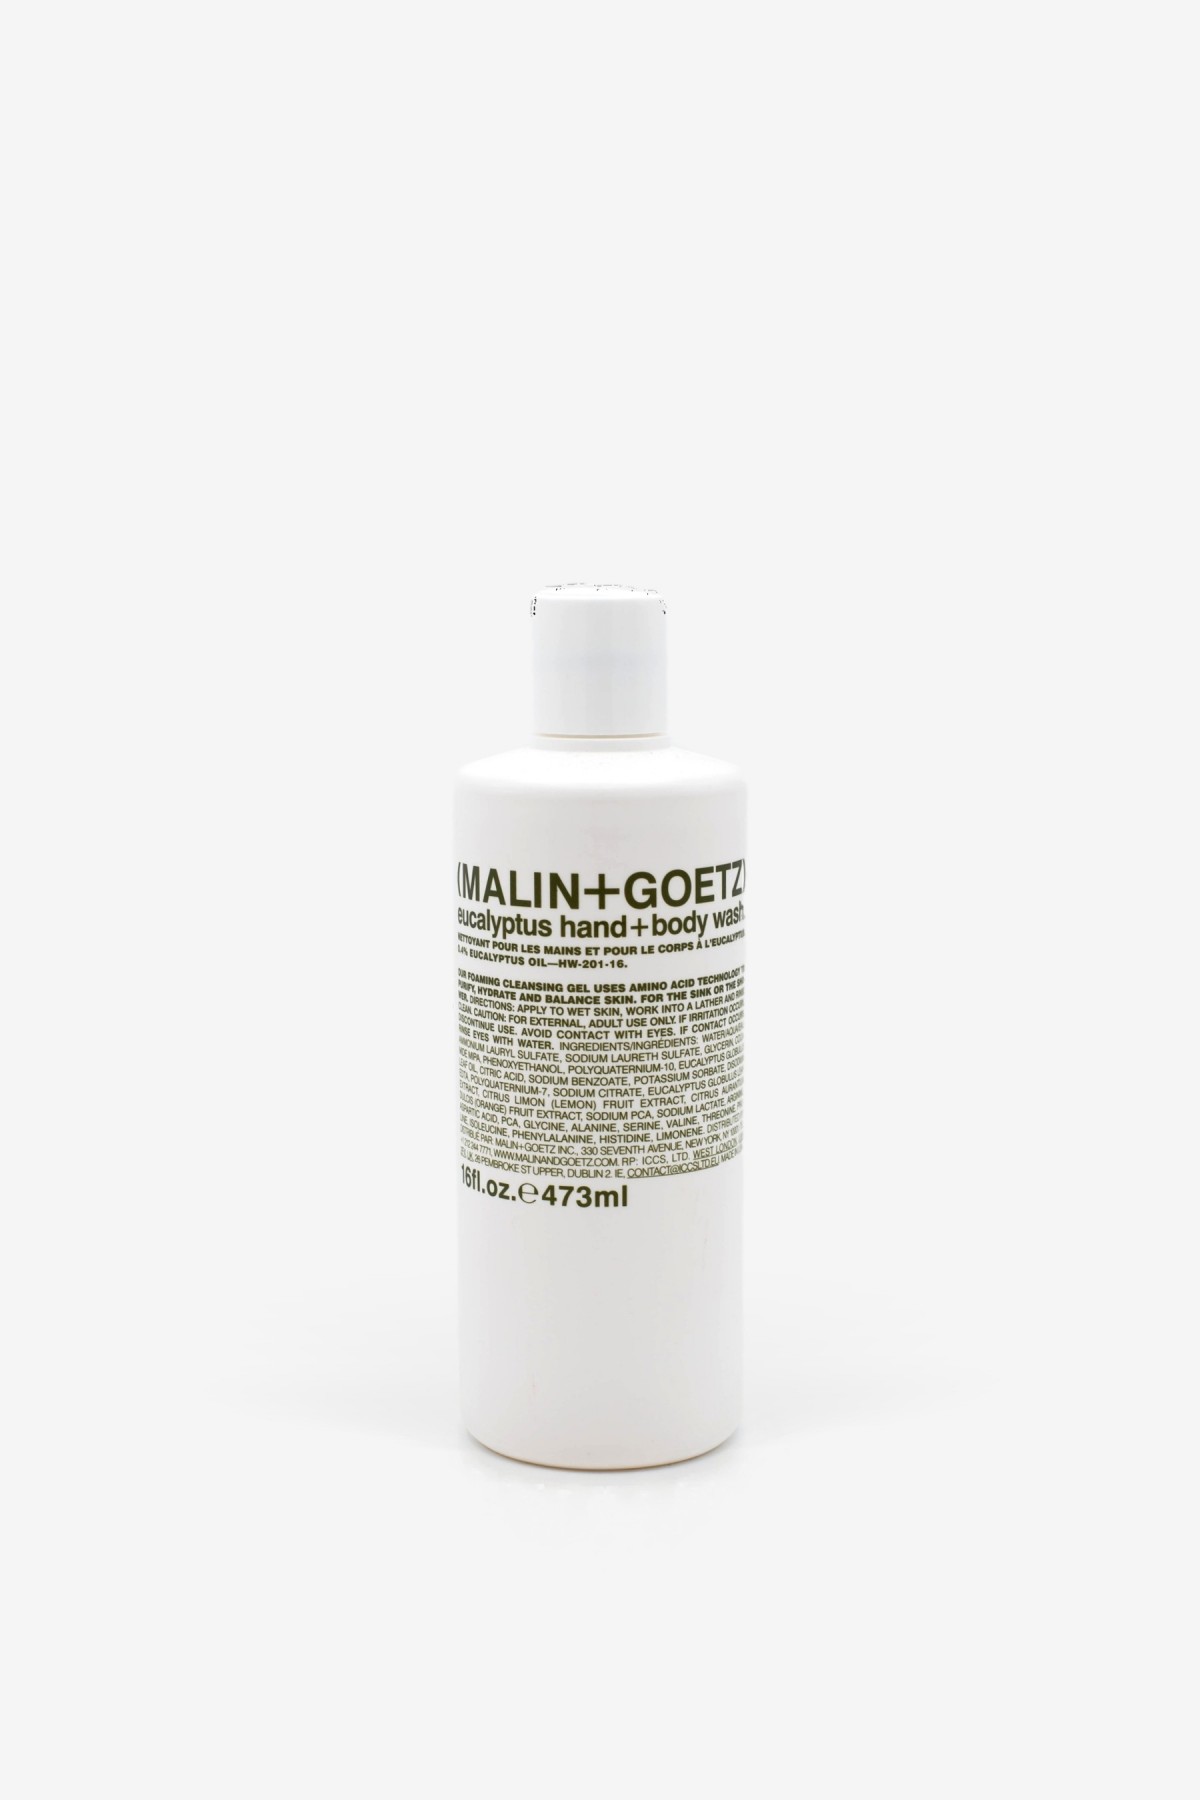 Malin+Goetz Eucalyptus Hand + Body Wash 473ml in 